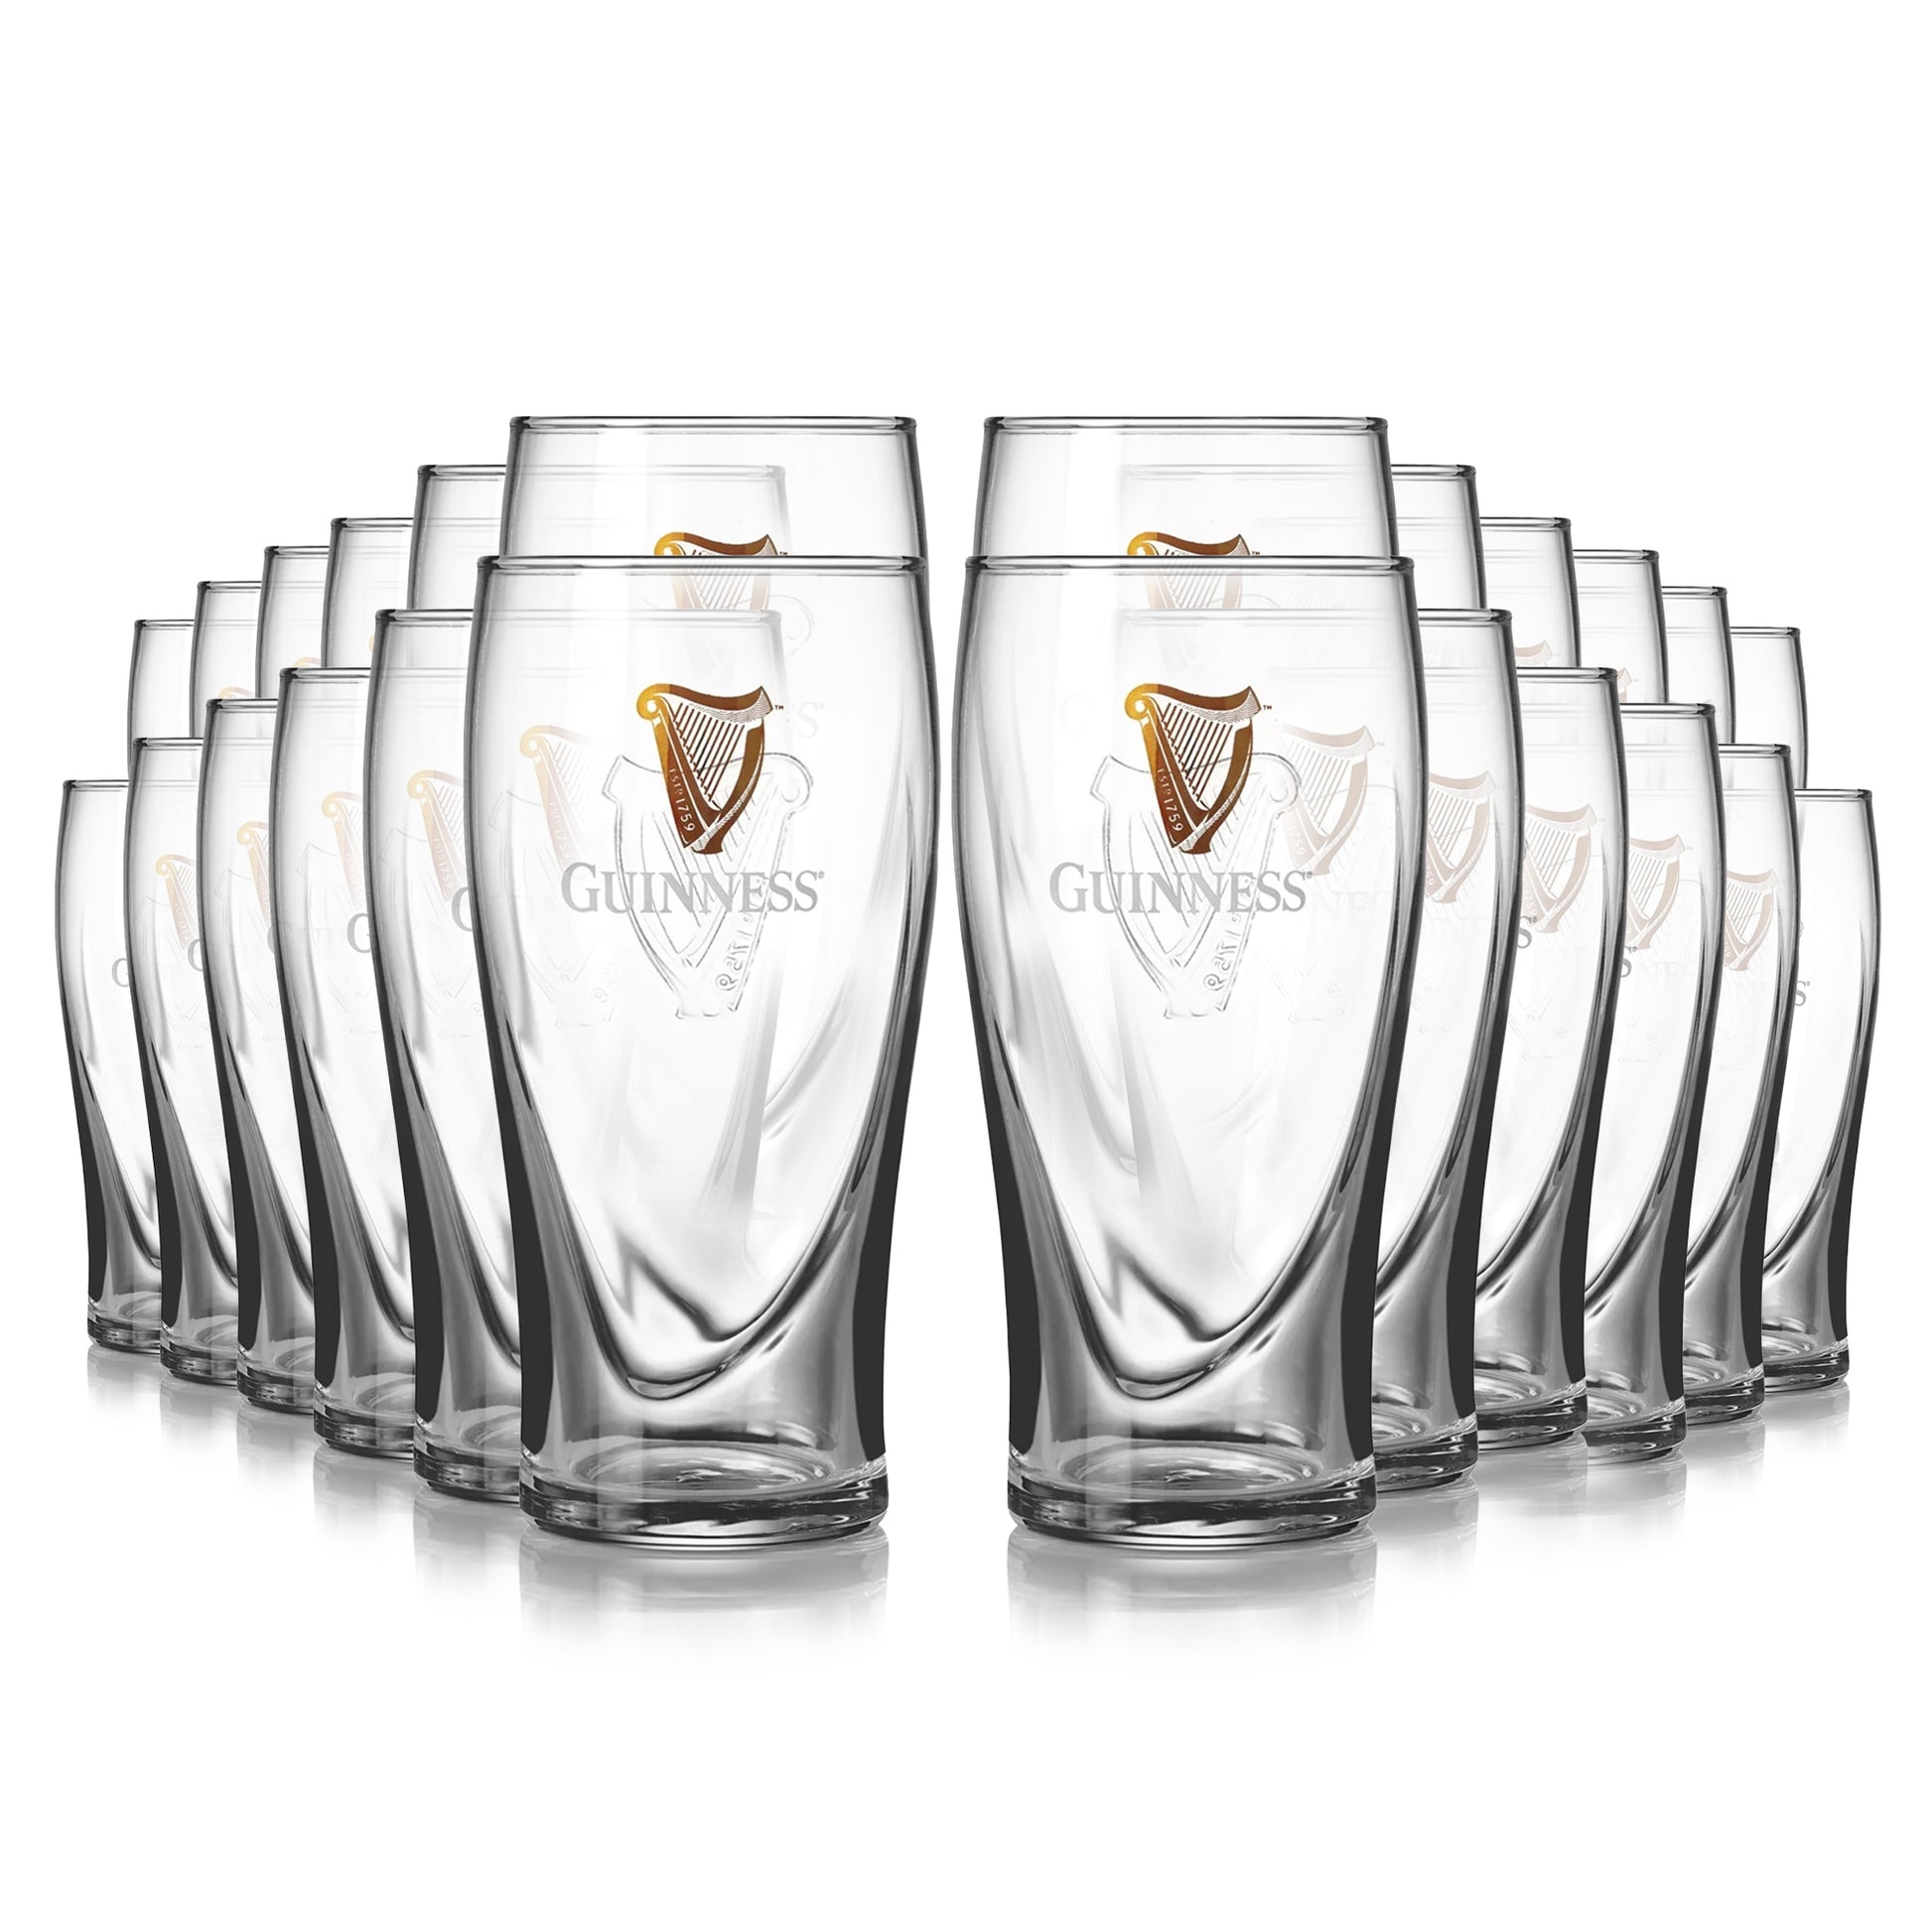 Guinness Glass Collectibles & Hobbies